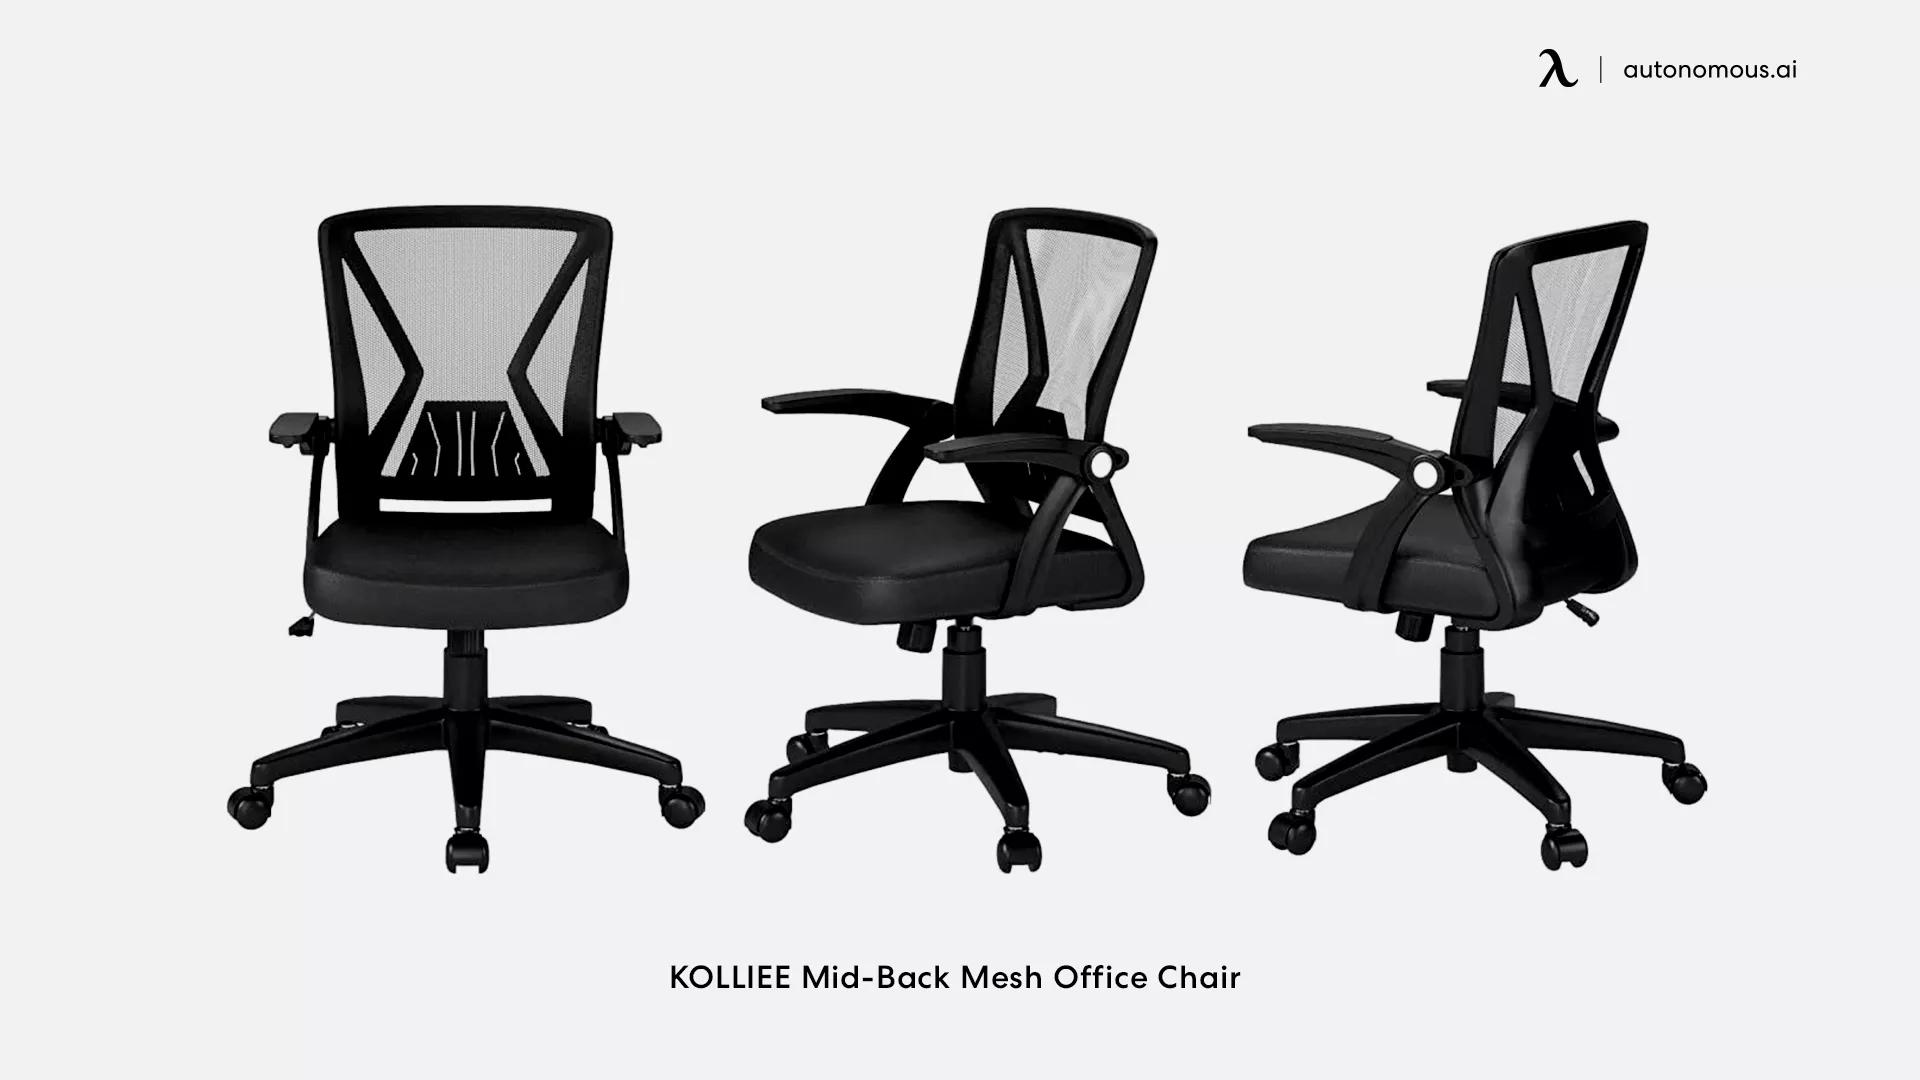 KOLLIEE Mid-Back Mesh Office Chair